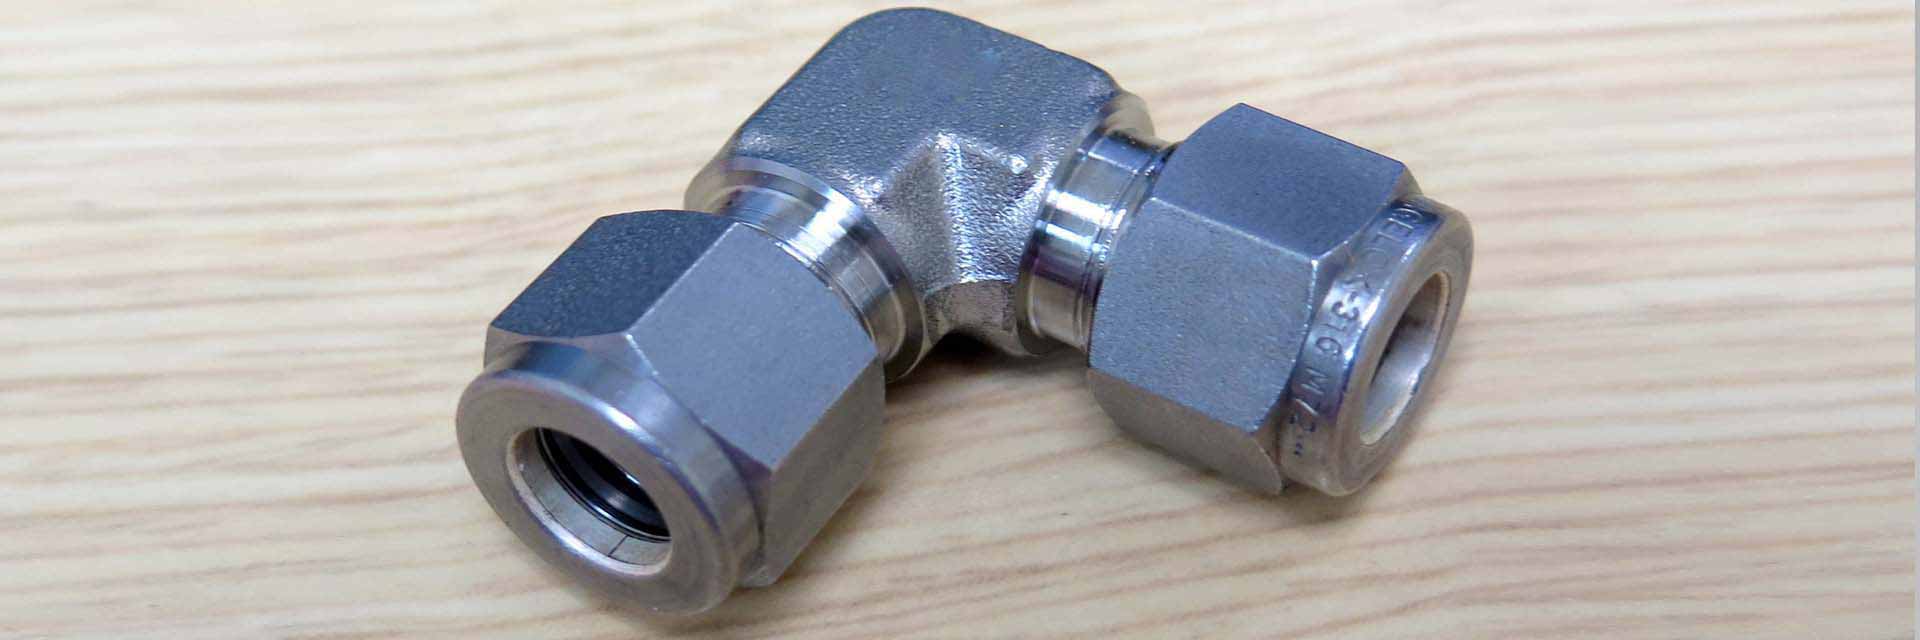 Stainless Steel 304 Union Elbow Supplier, Manufacturer